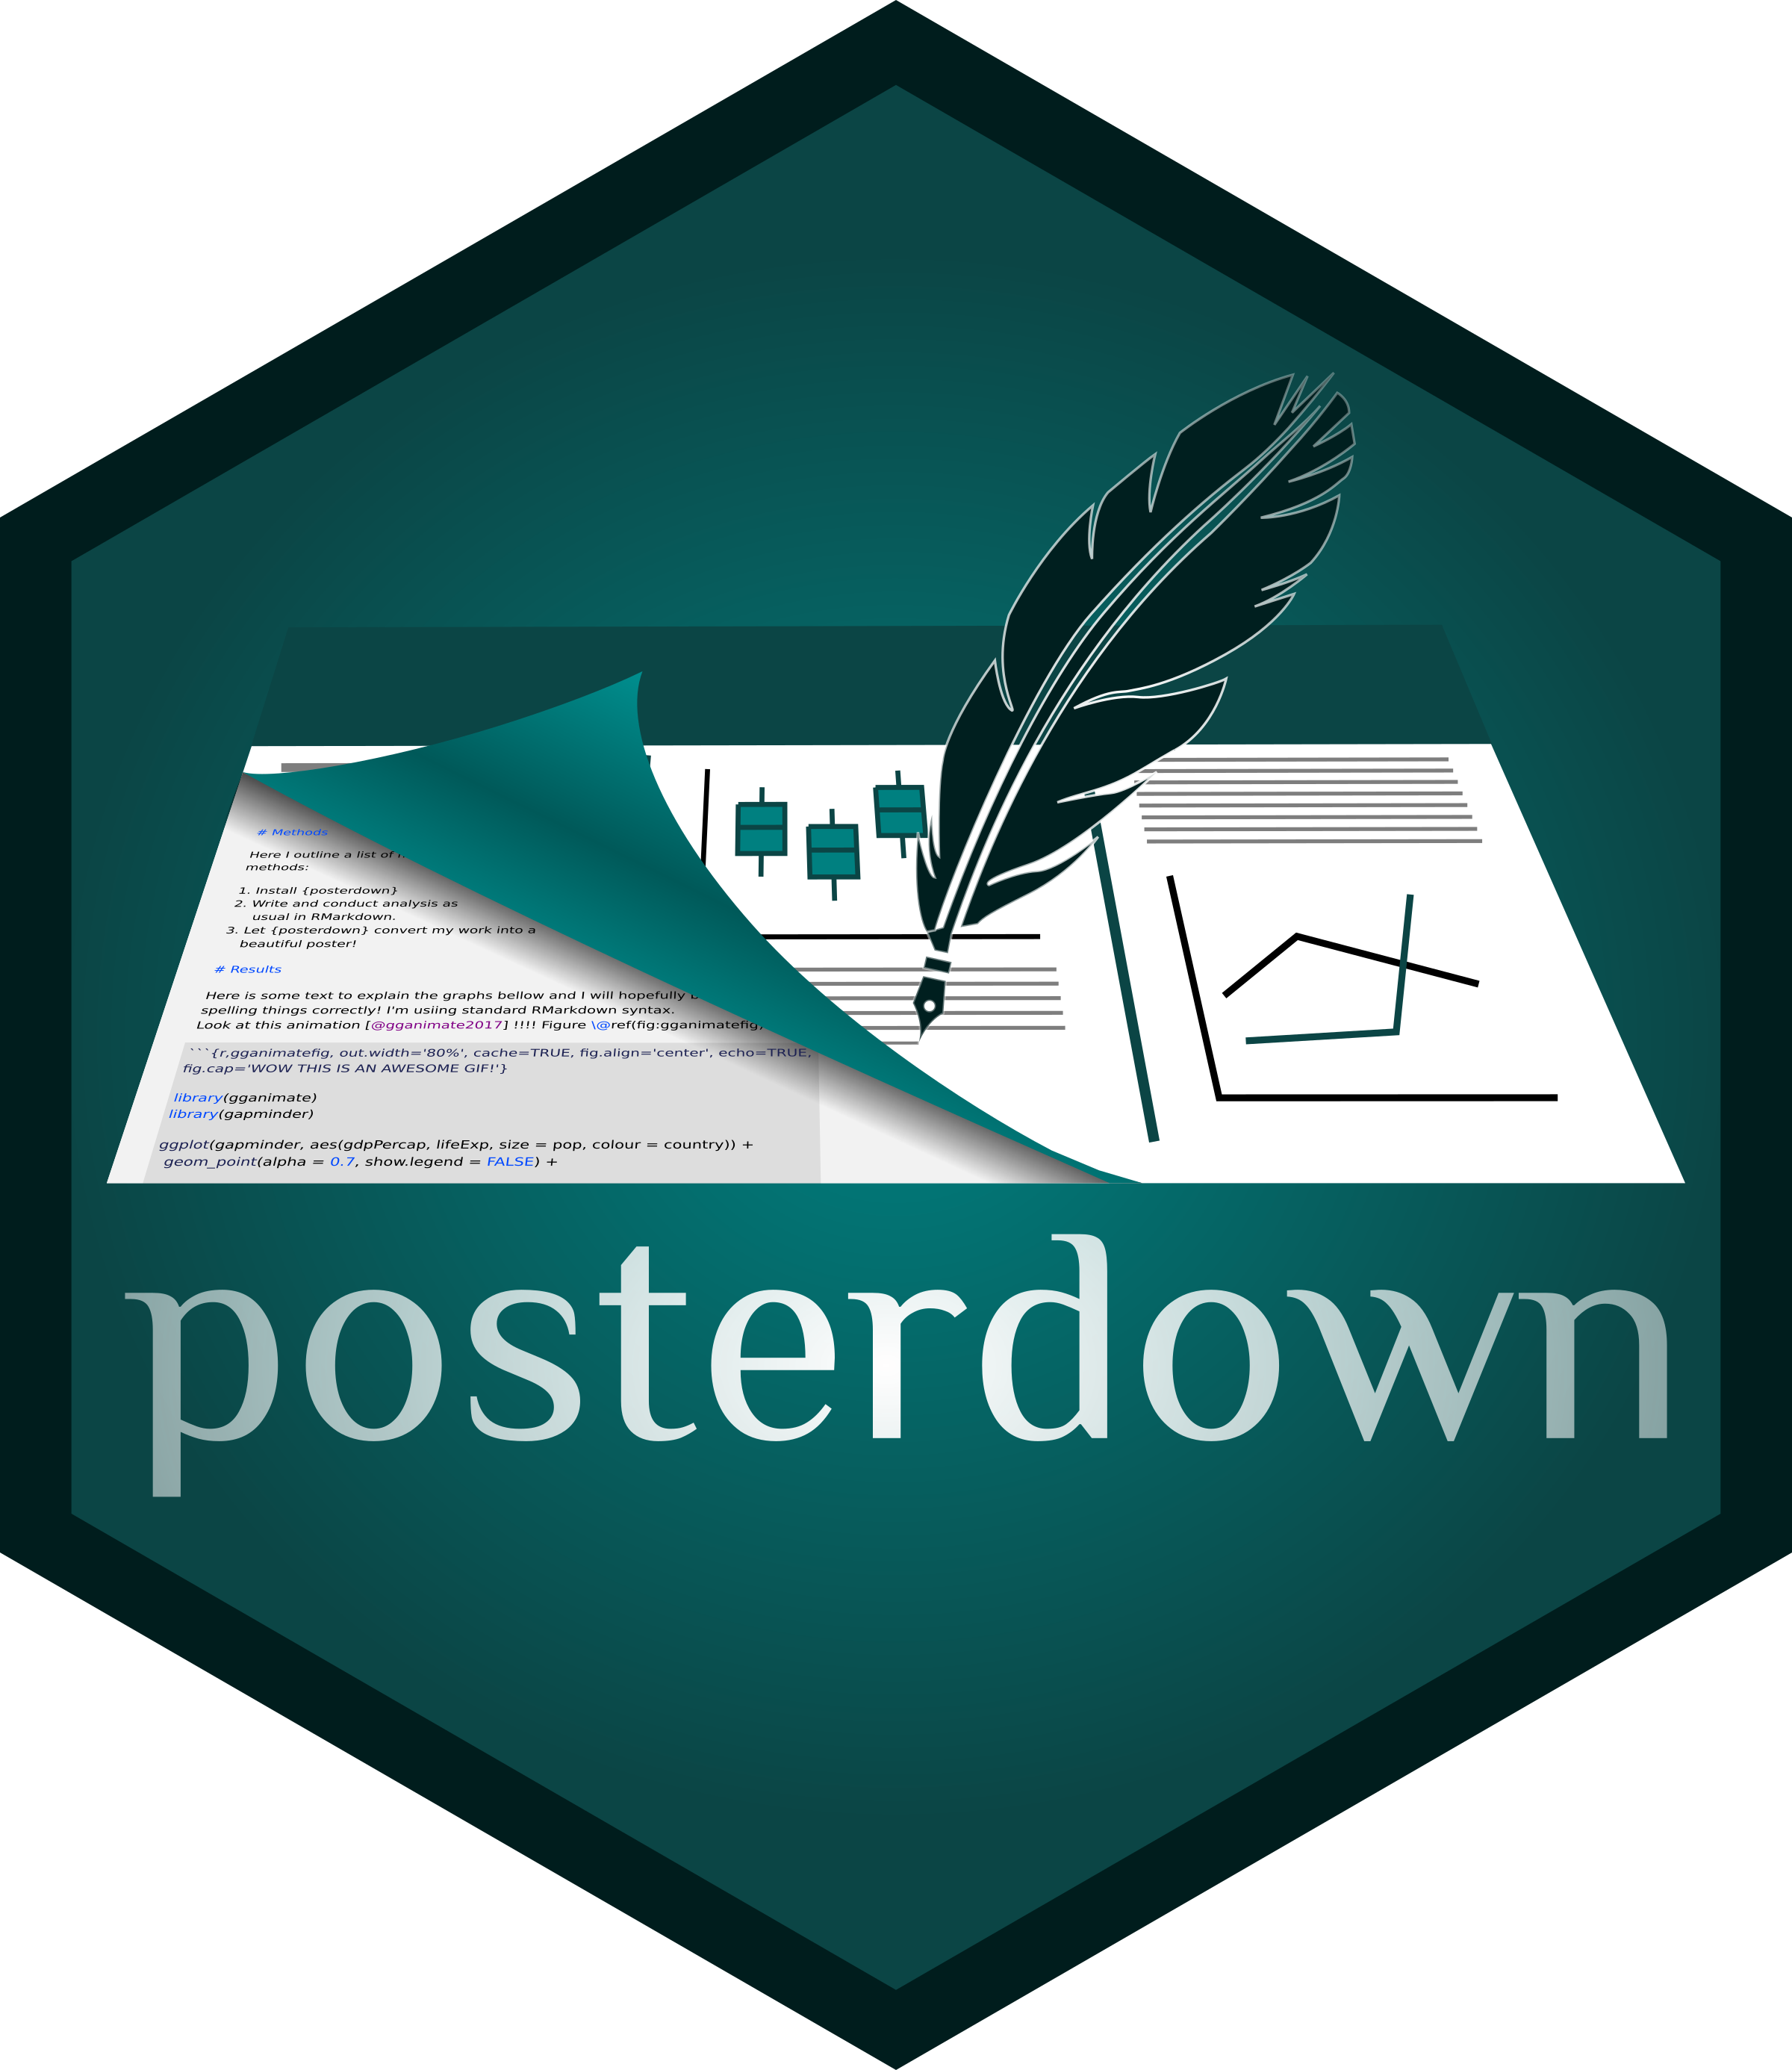 posterdown logo